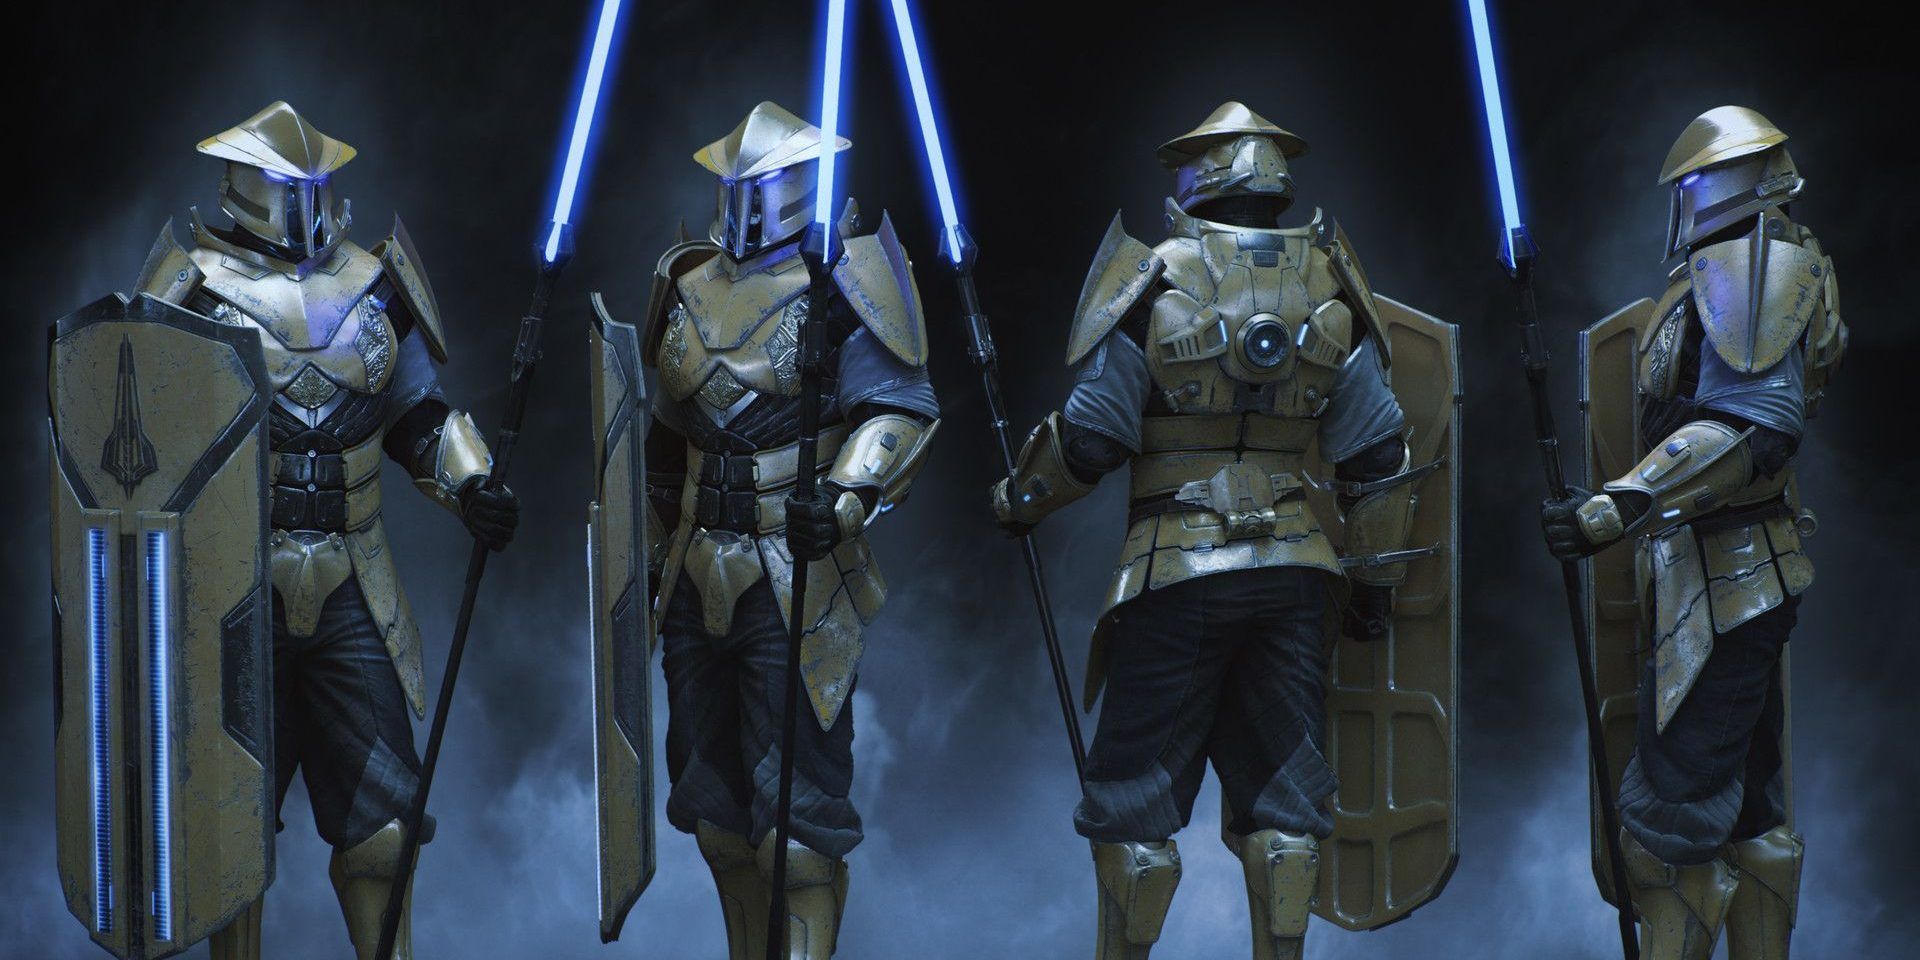 The Knights of Zakuul wielding lightsaber lances